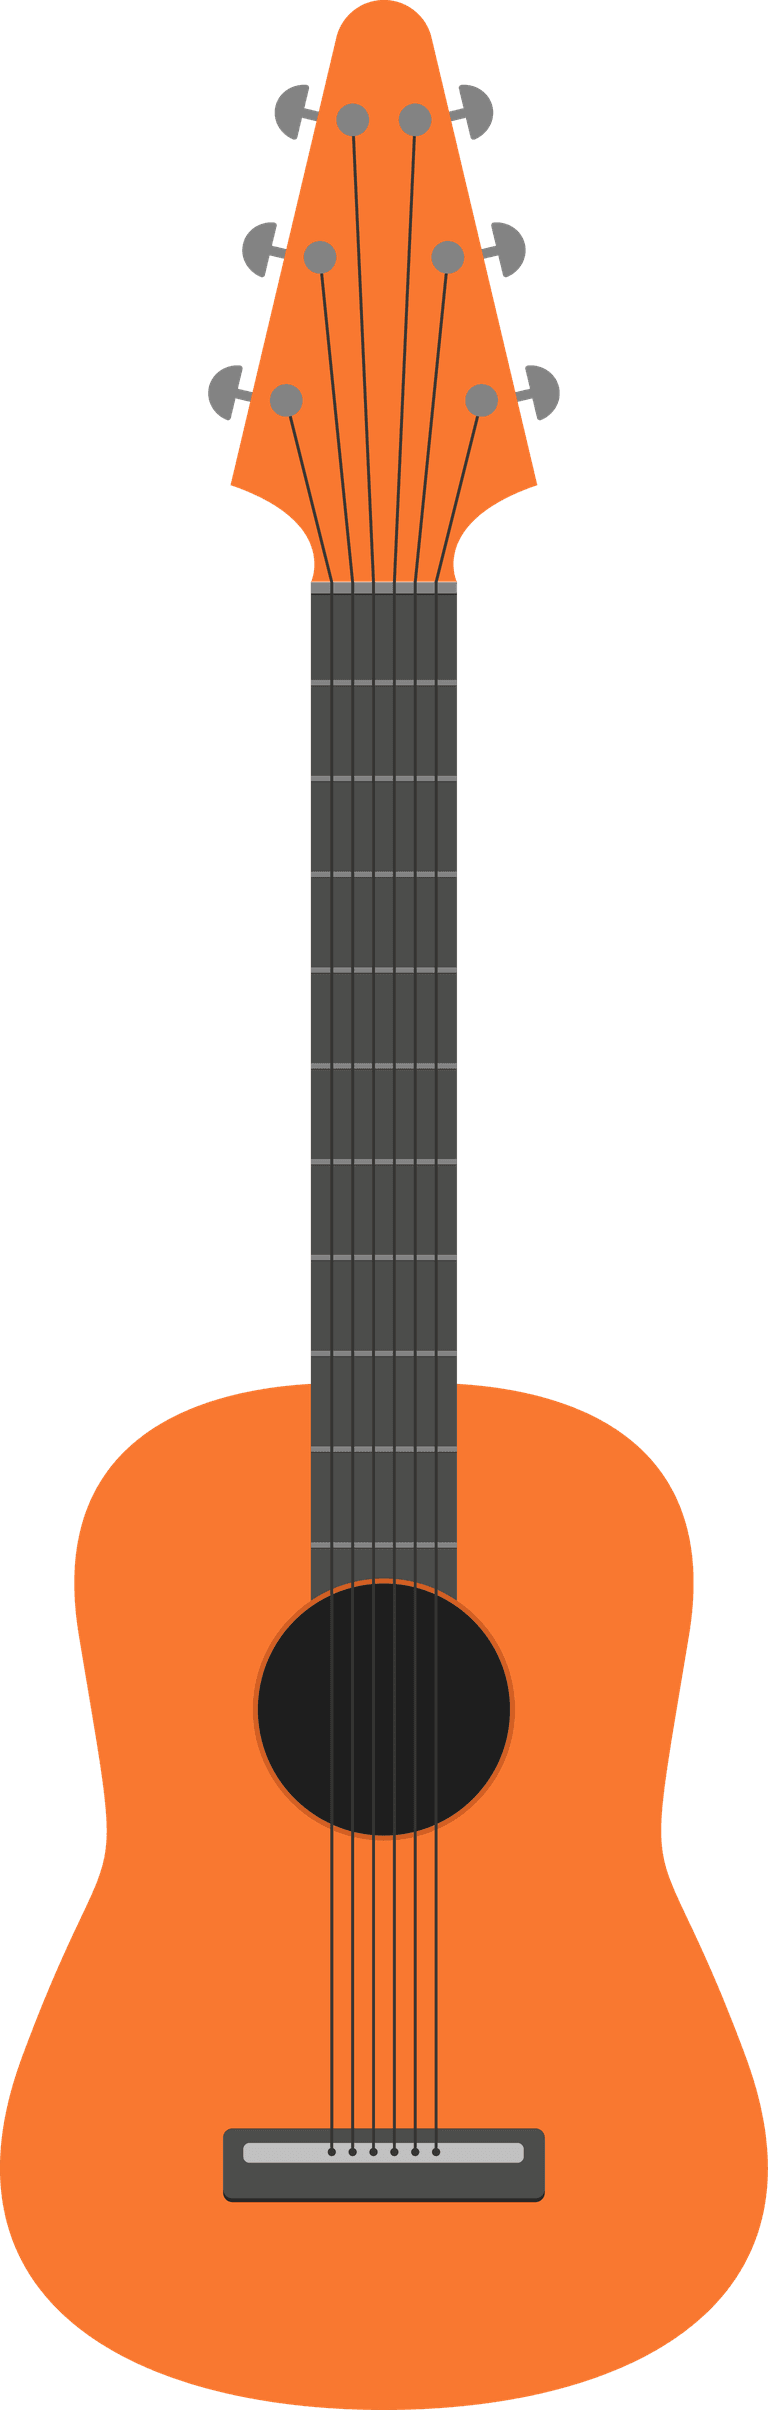 guitar illustration isolated on white background